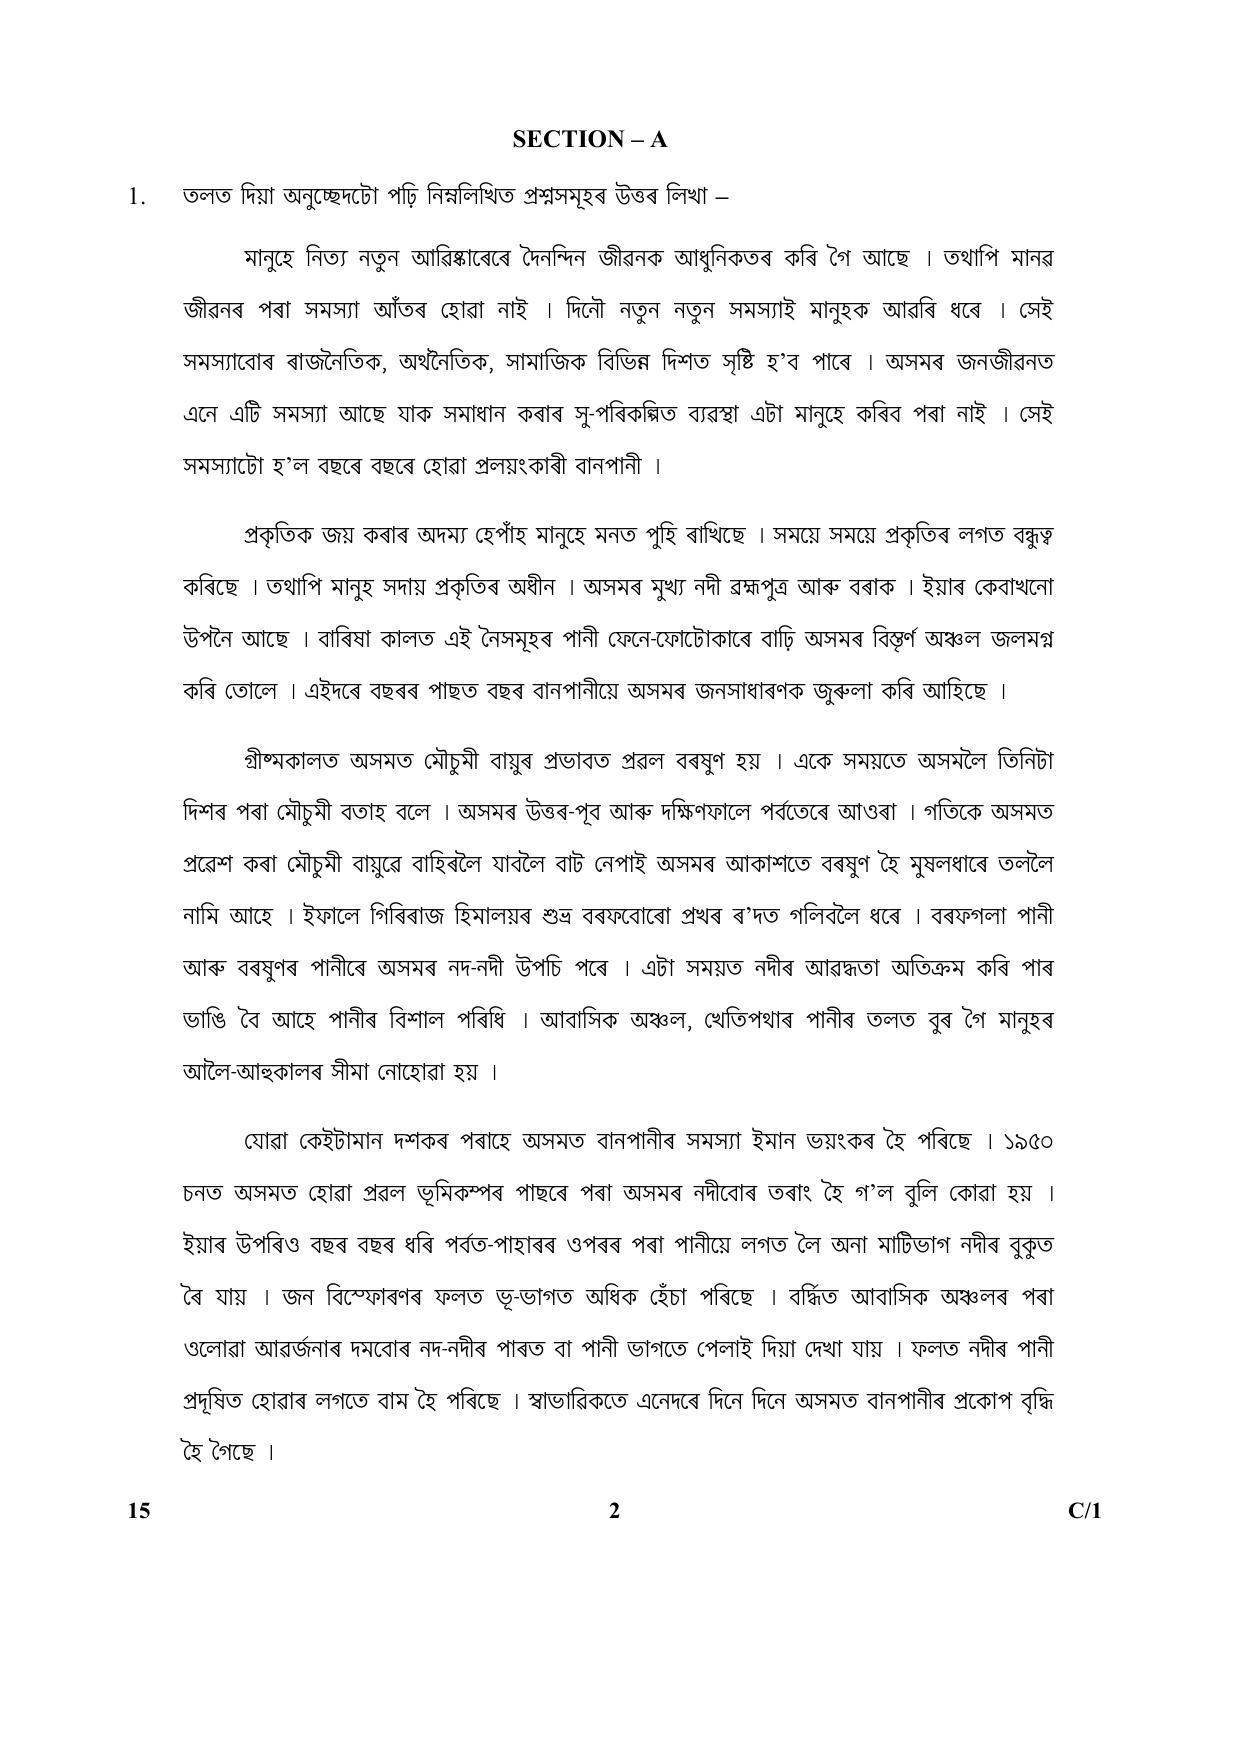 CBSE Class 10 15 (Assamese) 2018 Compartment Question Paper - Page 2